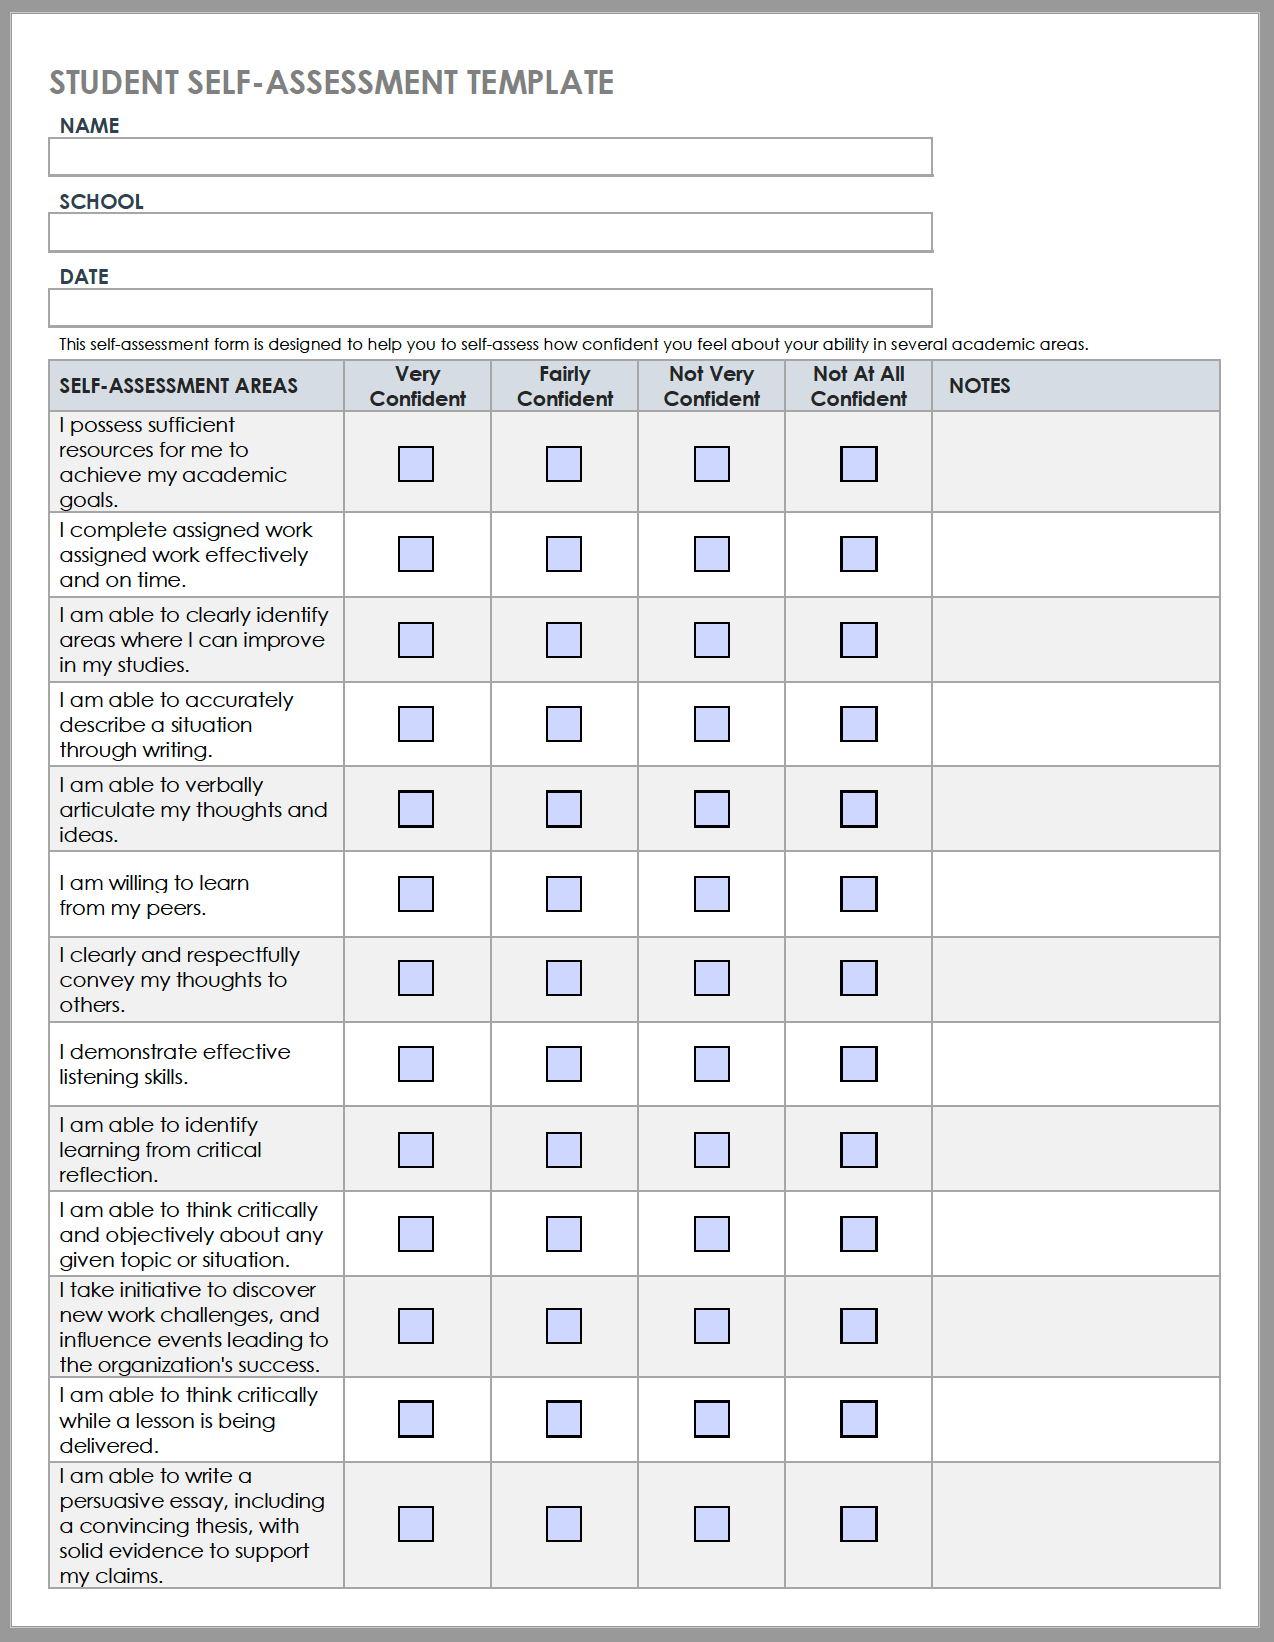 Free Self-Evaluation Templates | Smartsheet pertaining to Free Employee Self Evaluation Forms Printable